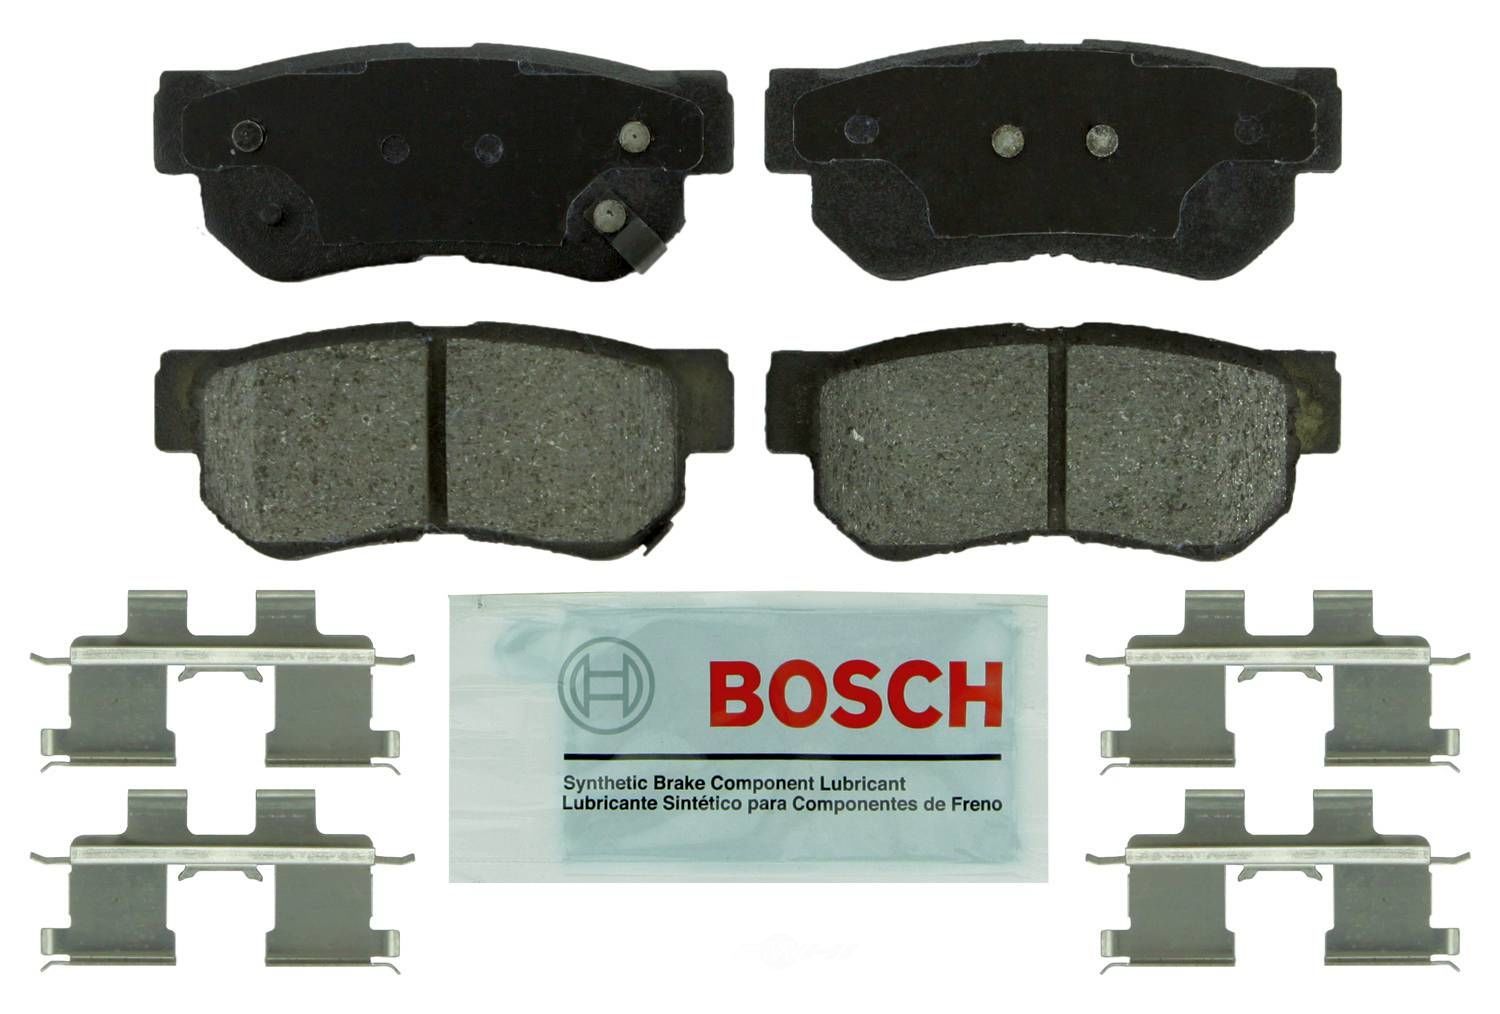 BOSCH BRAKE - Bosch Blue Ceramic Brake Pads with Hardware (Rear) - BQC BE813H